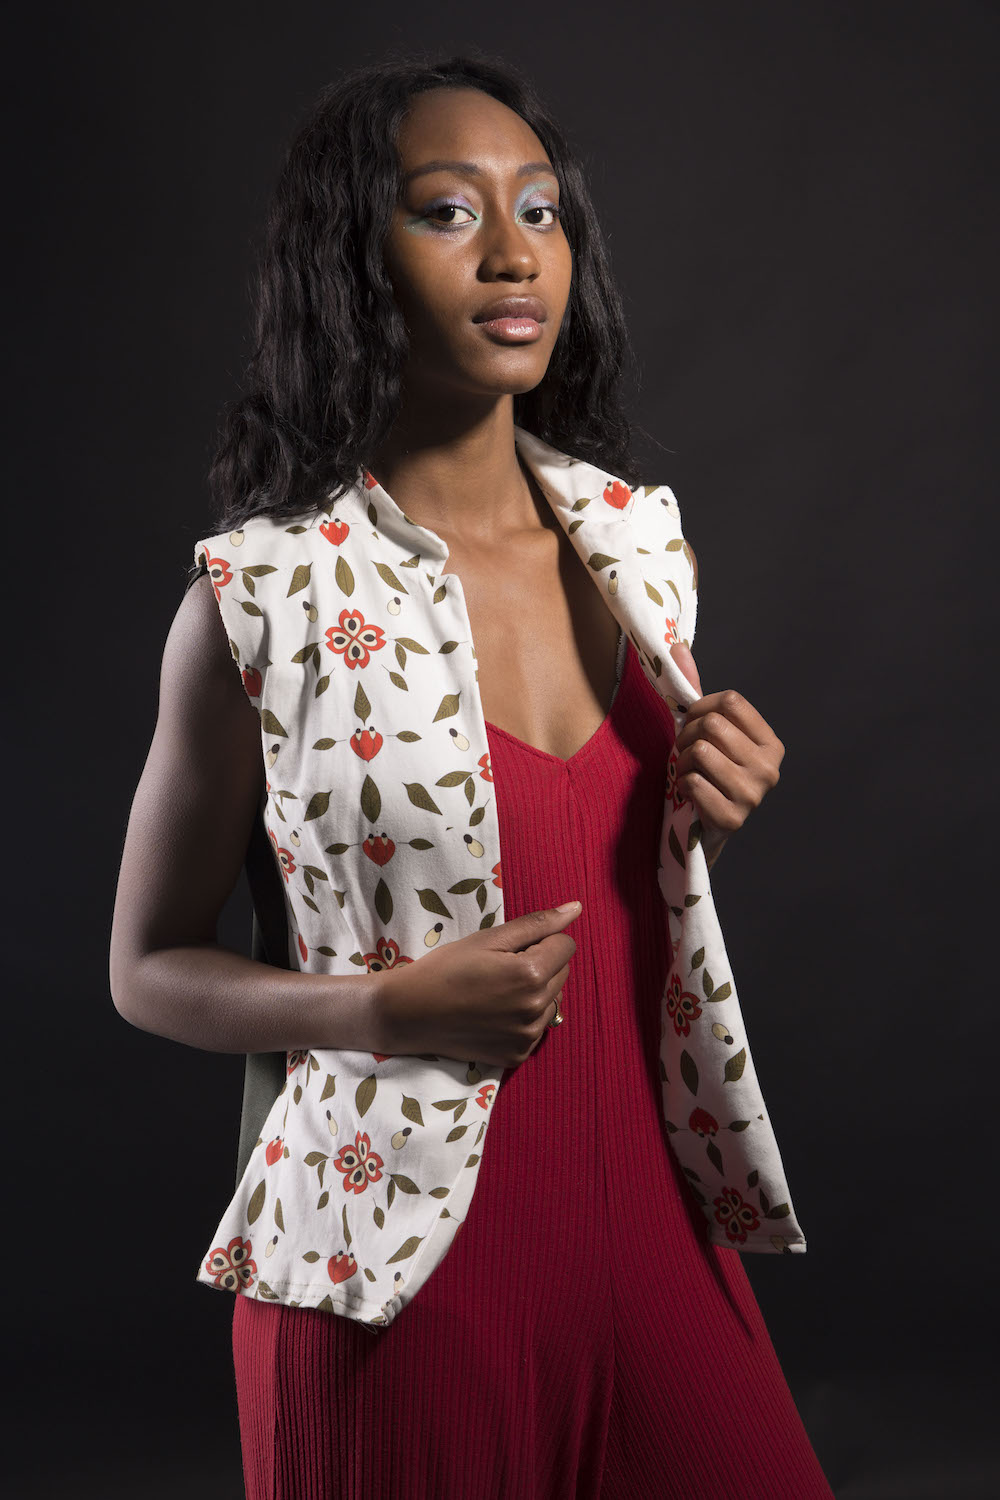 Ackee_Vest - Young Jamaican Artist Celebrates Tropical Fruits Through Fashion Design